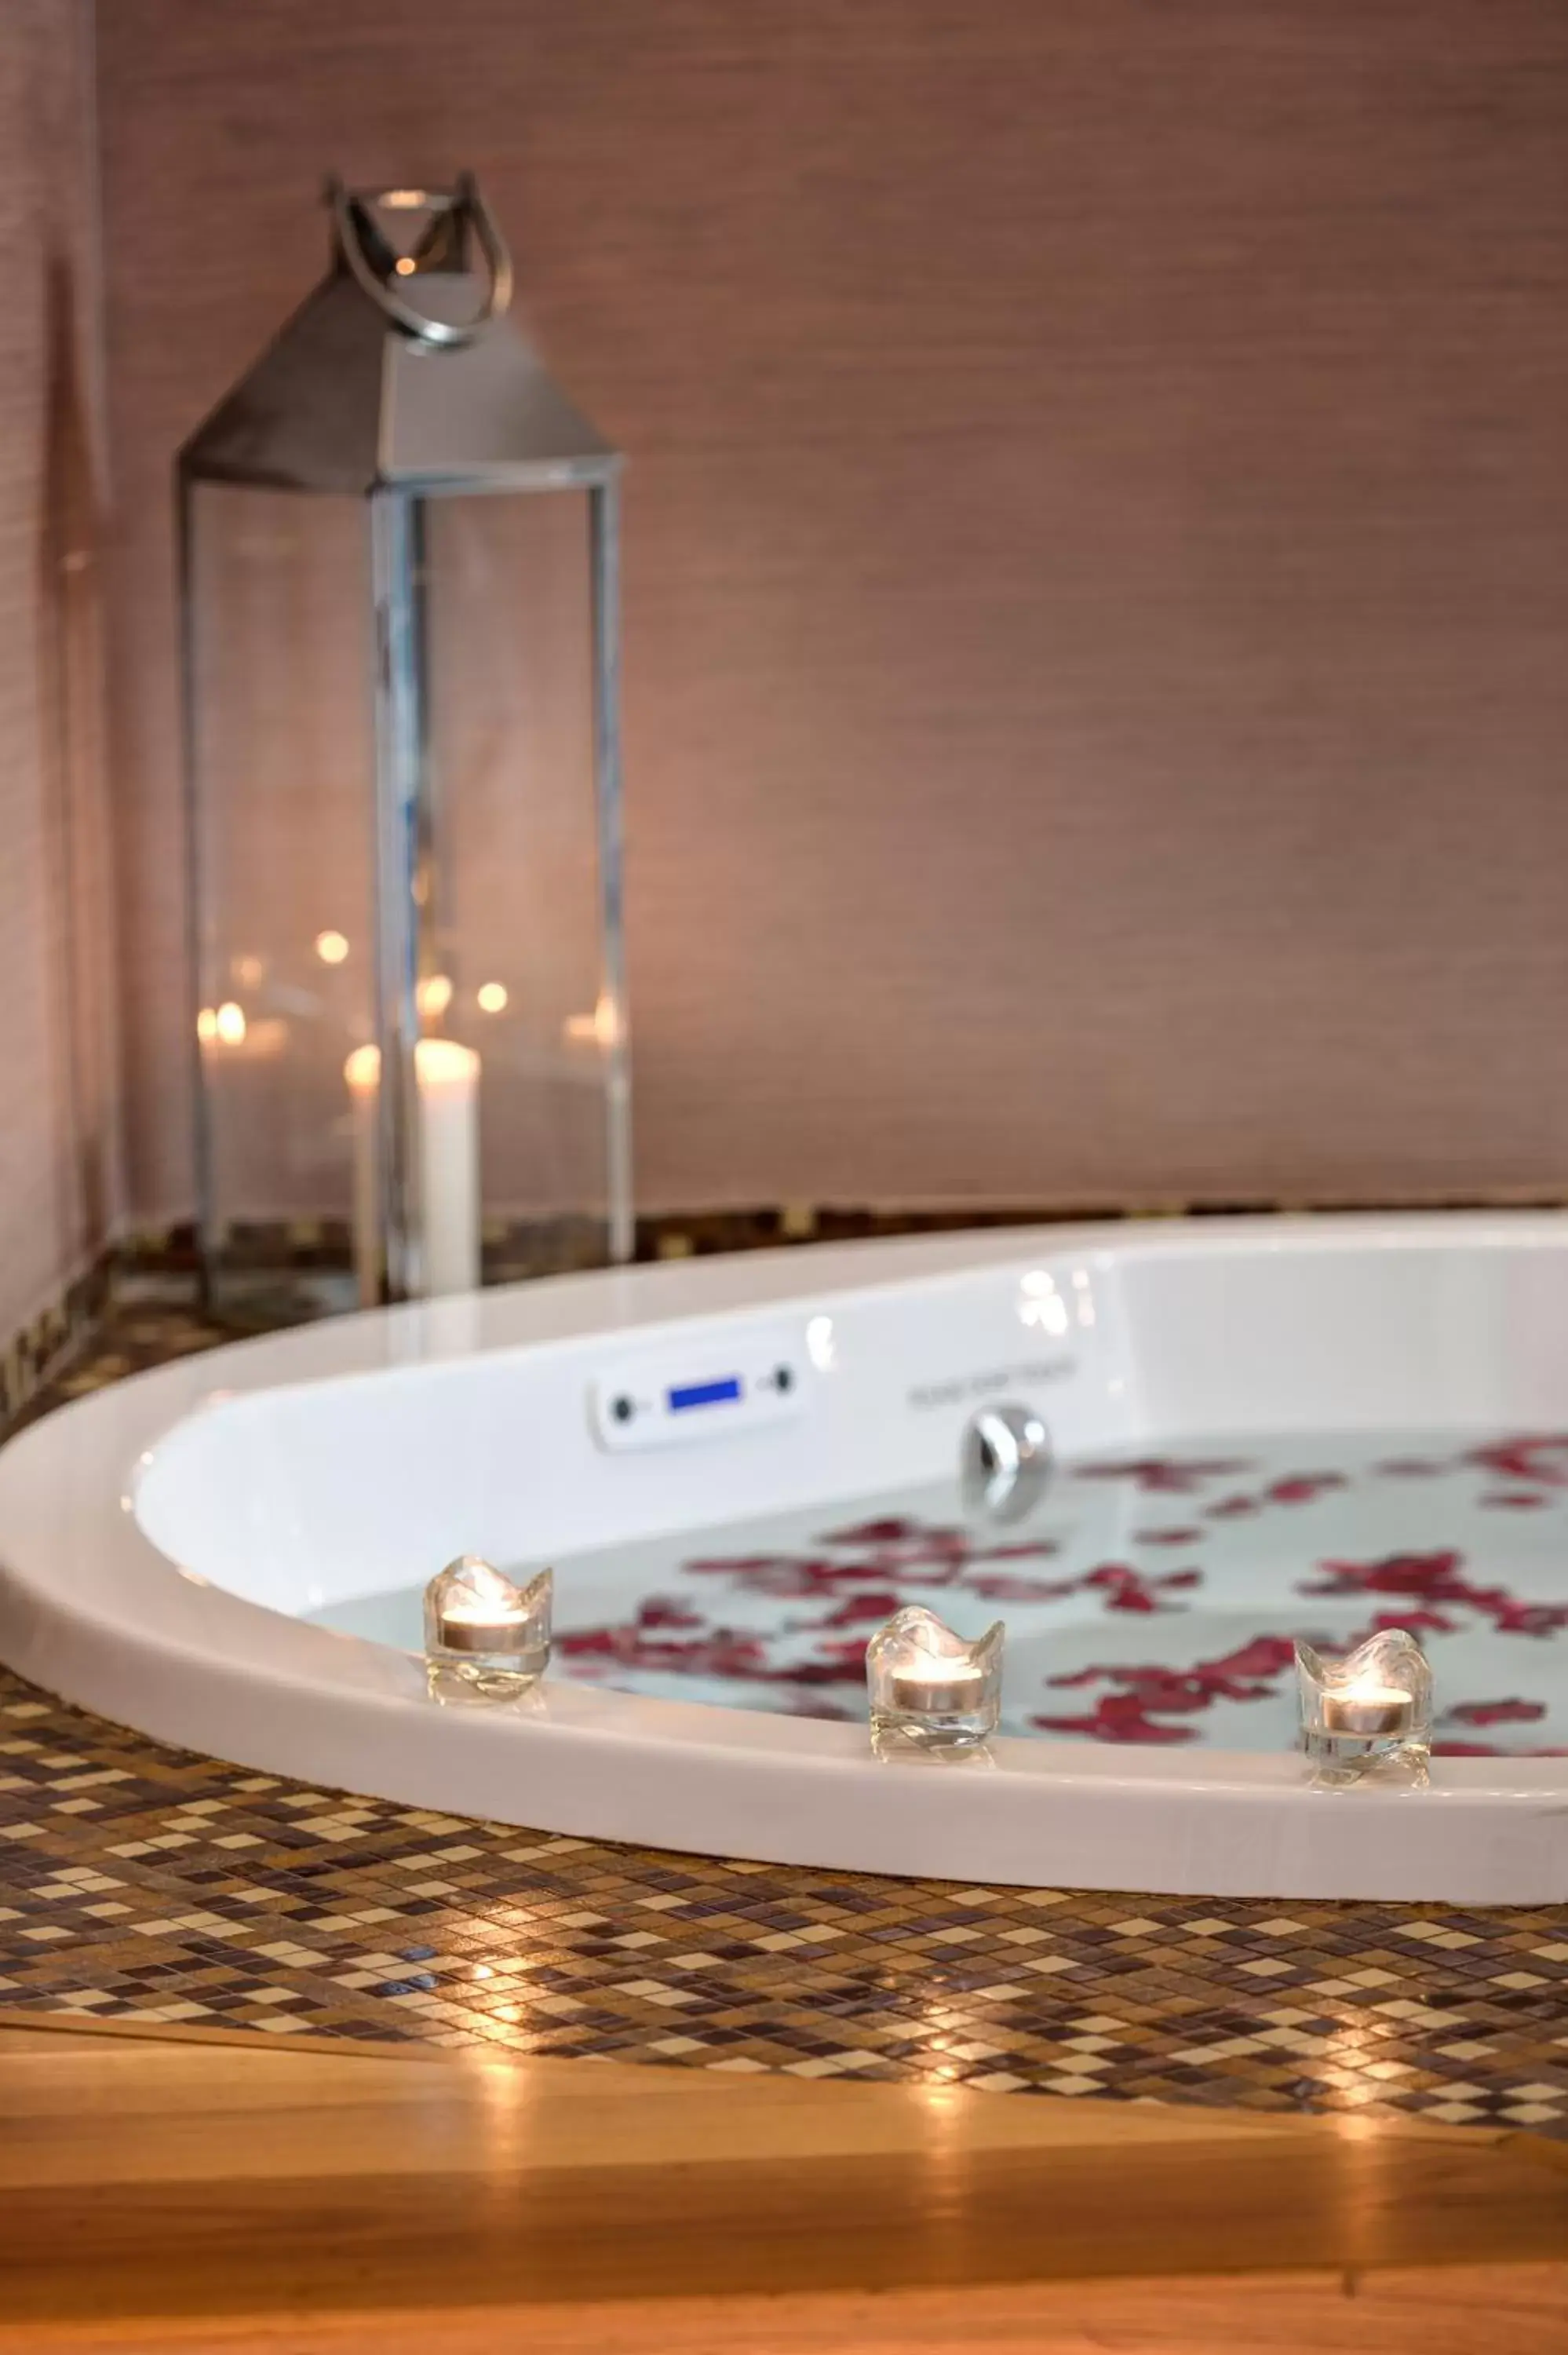 Hot Tub in Dharma Luxury Hotel